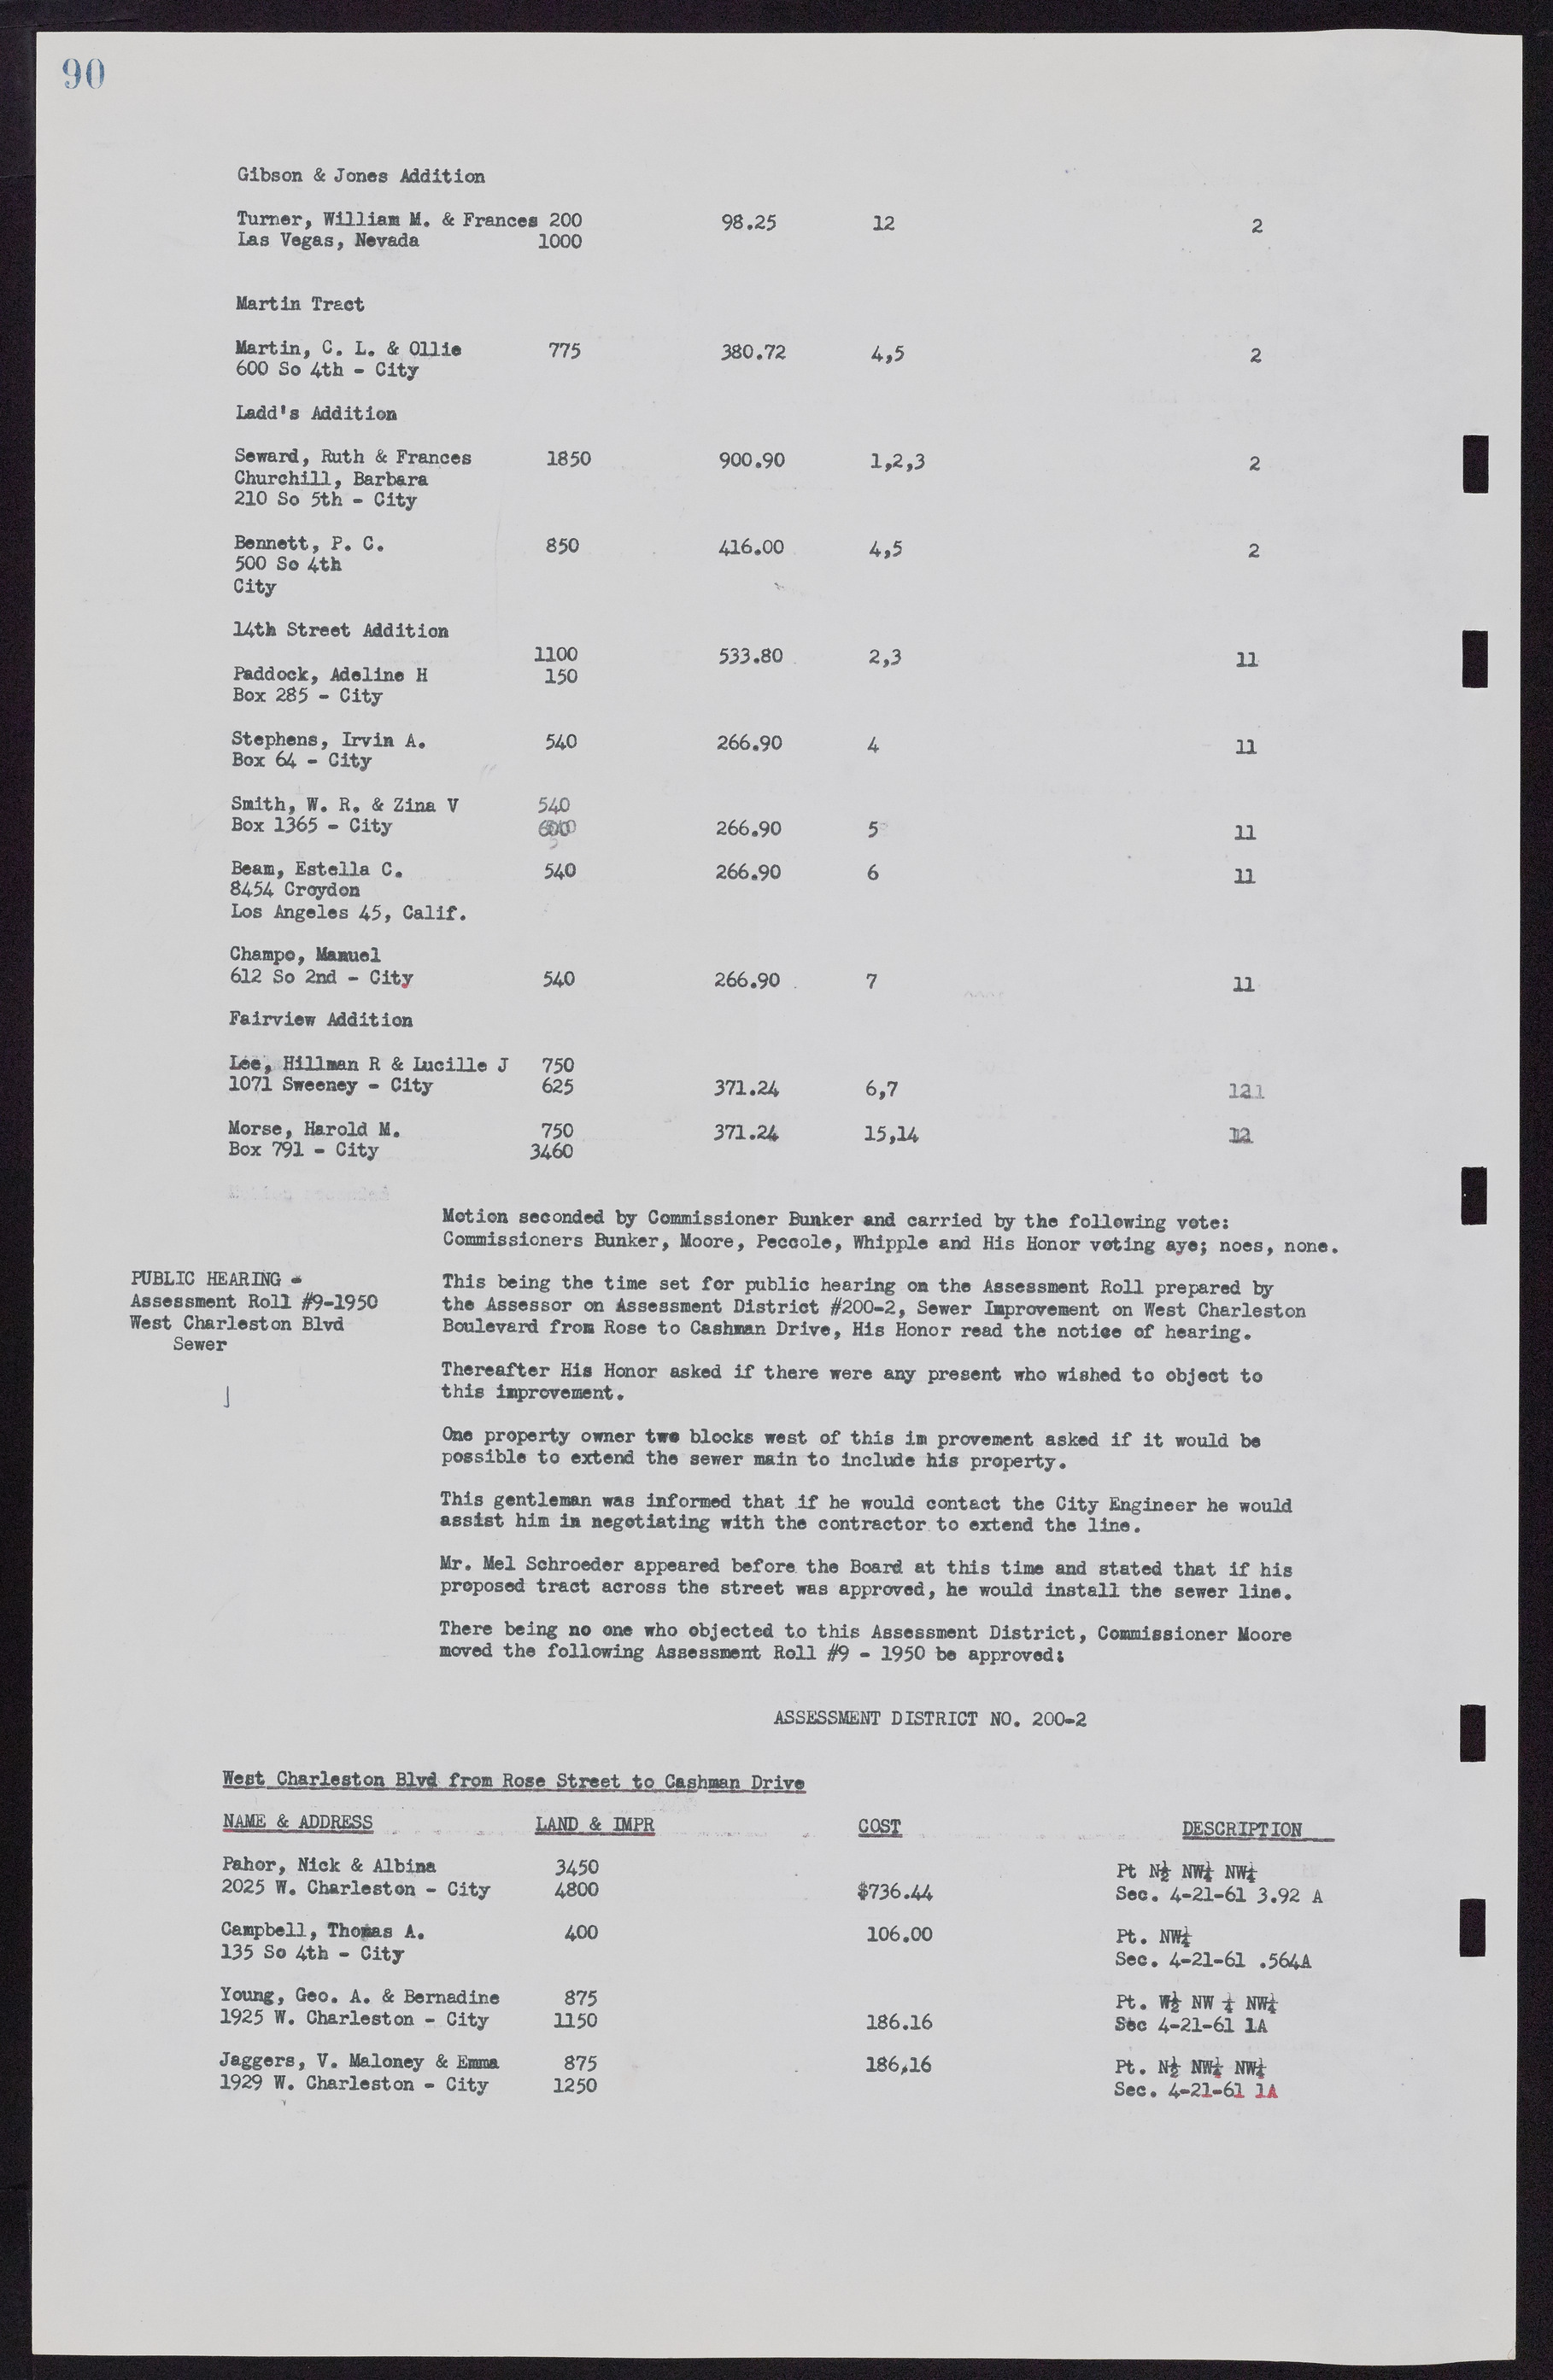 Las Vegas City Commission Minutes, November 7, 1949 to May 21, 1952, lvc000007-98